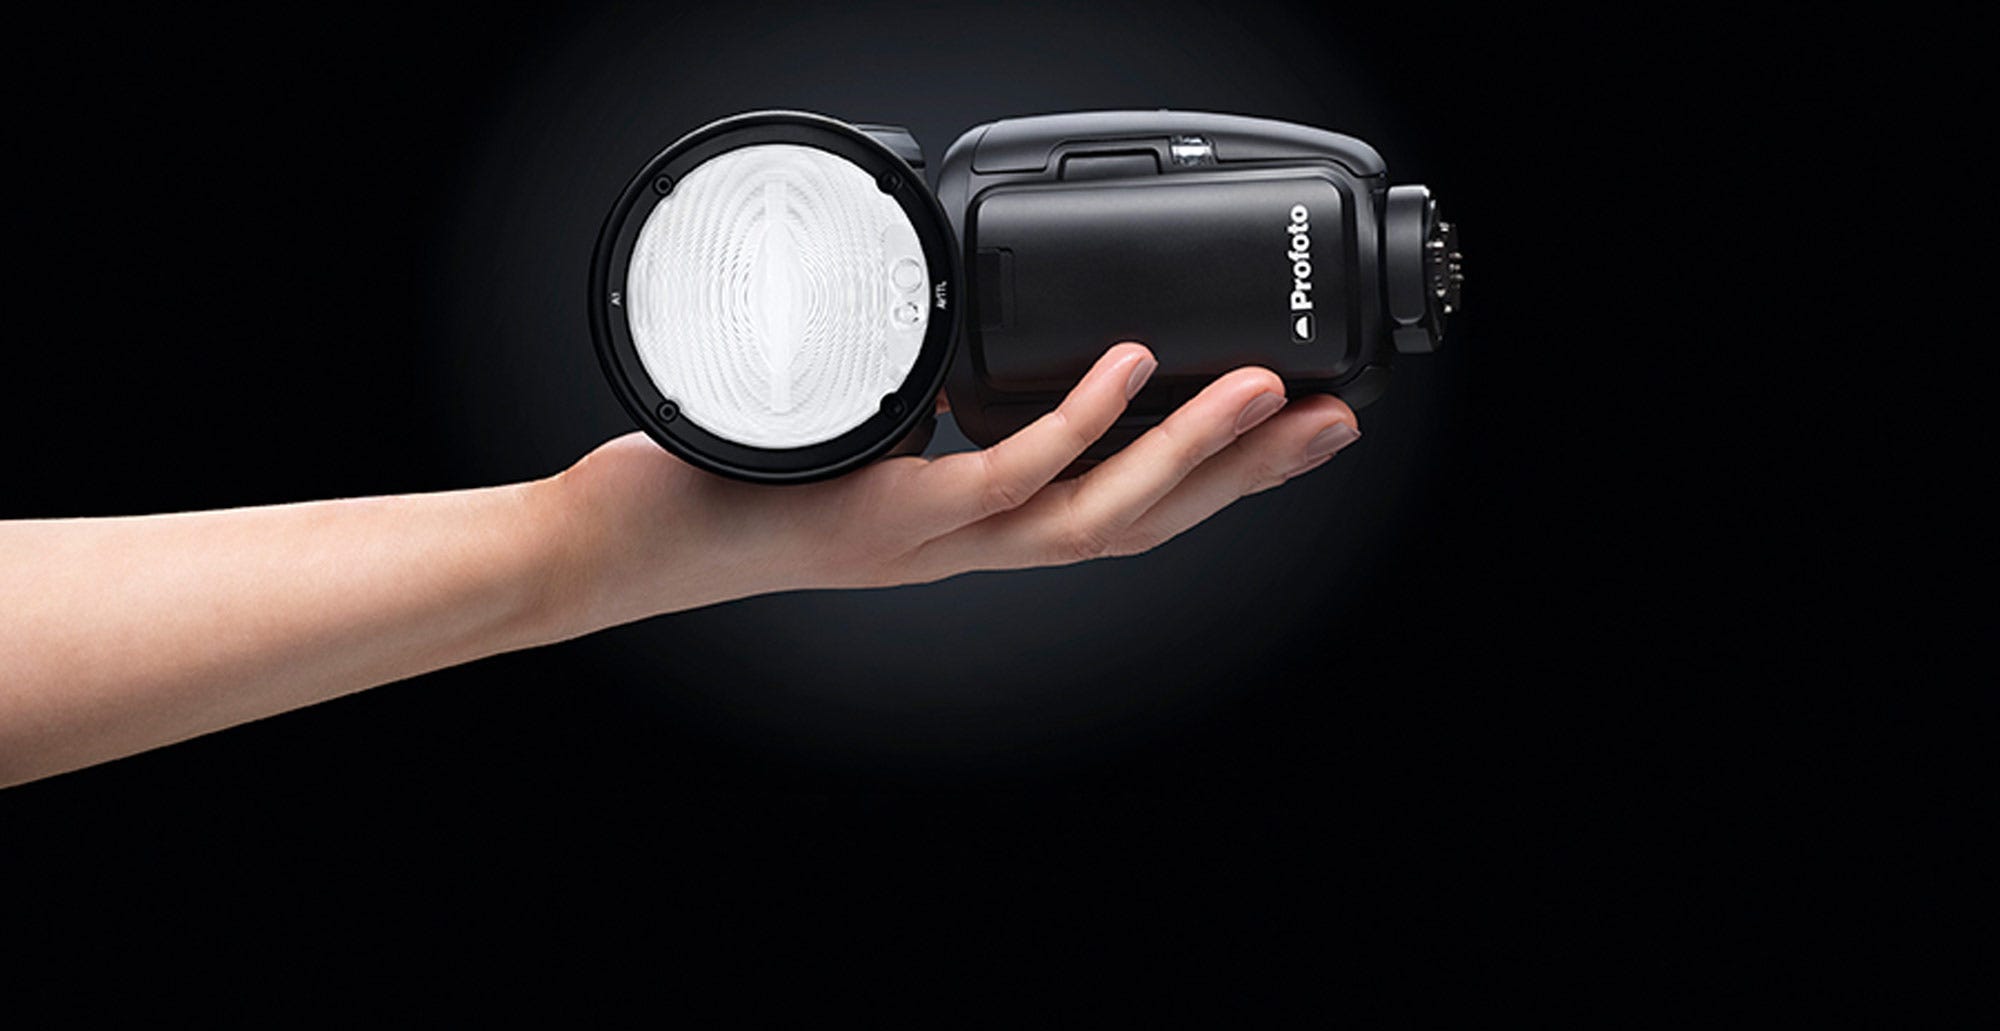 Profoto A1 AirTTL-C Studio Light for Canon 901201 - Adorama